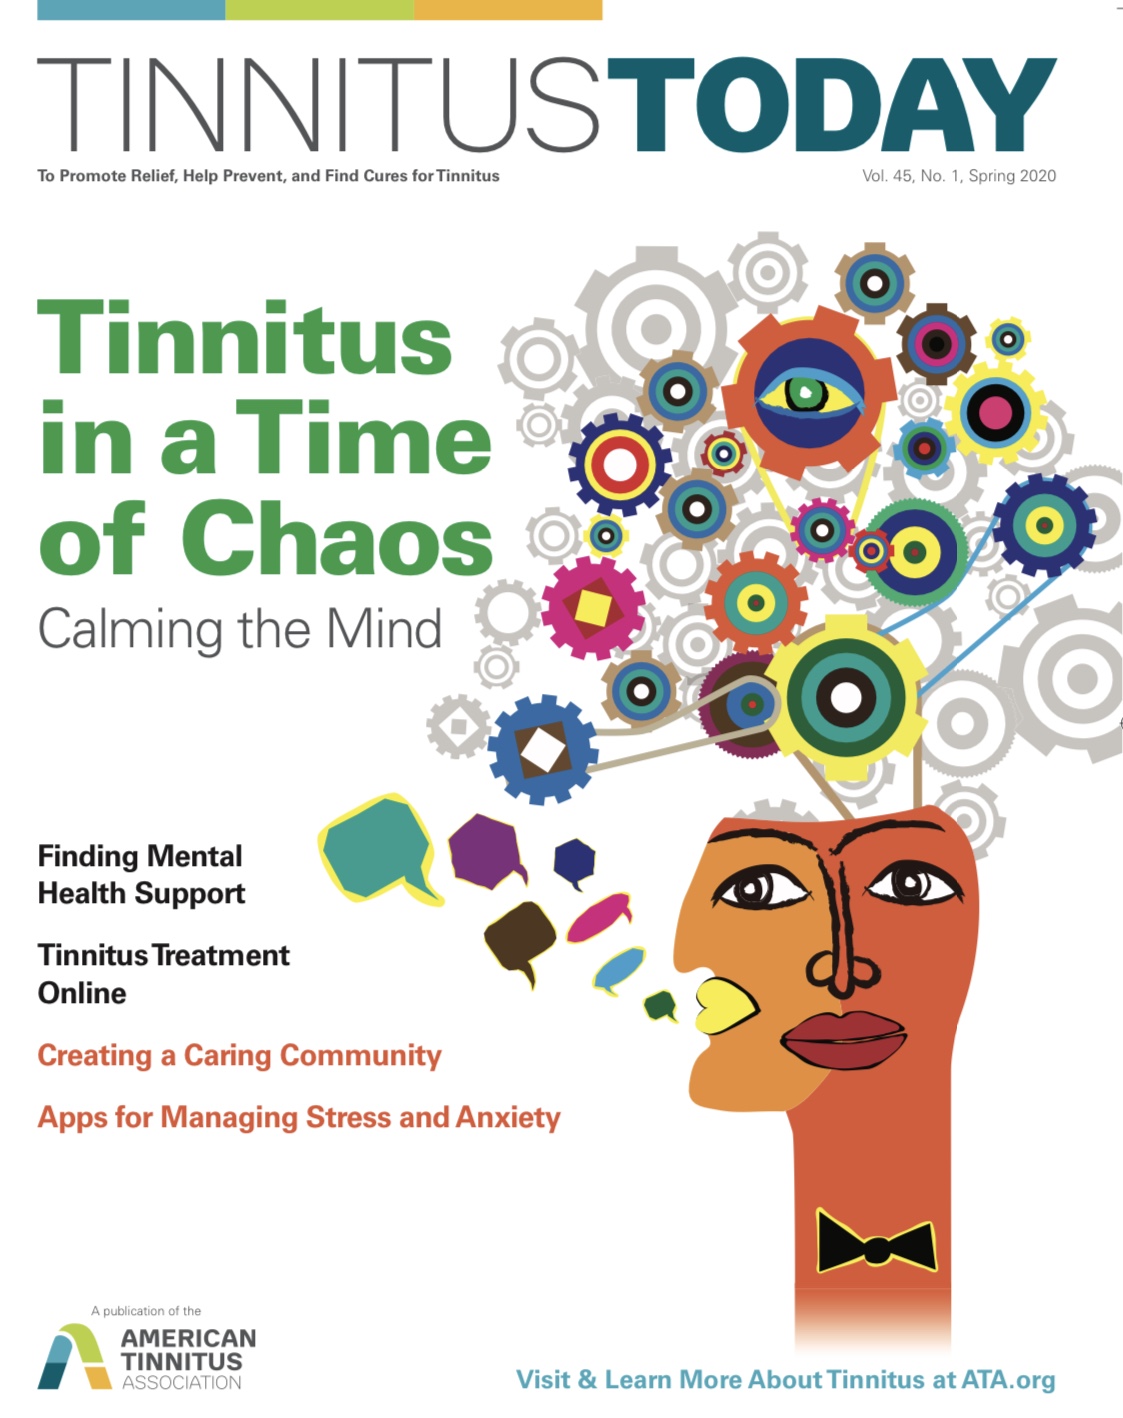 Tinnitus Today Addresses Mental Health